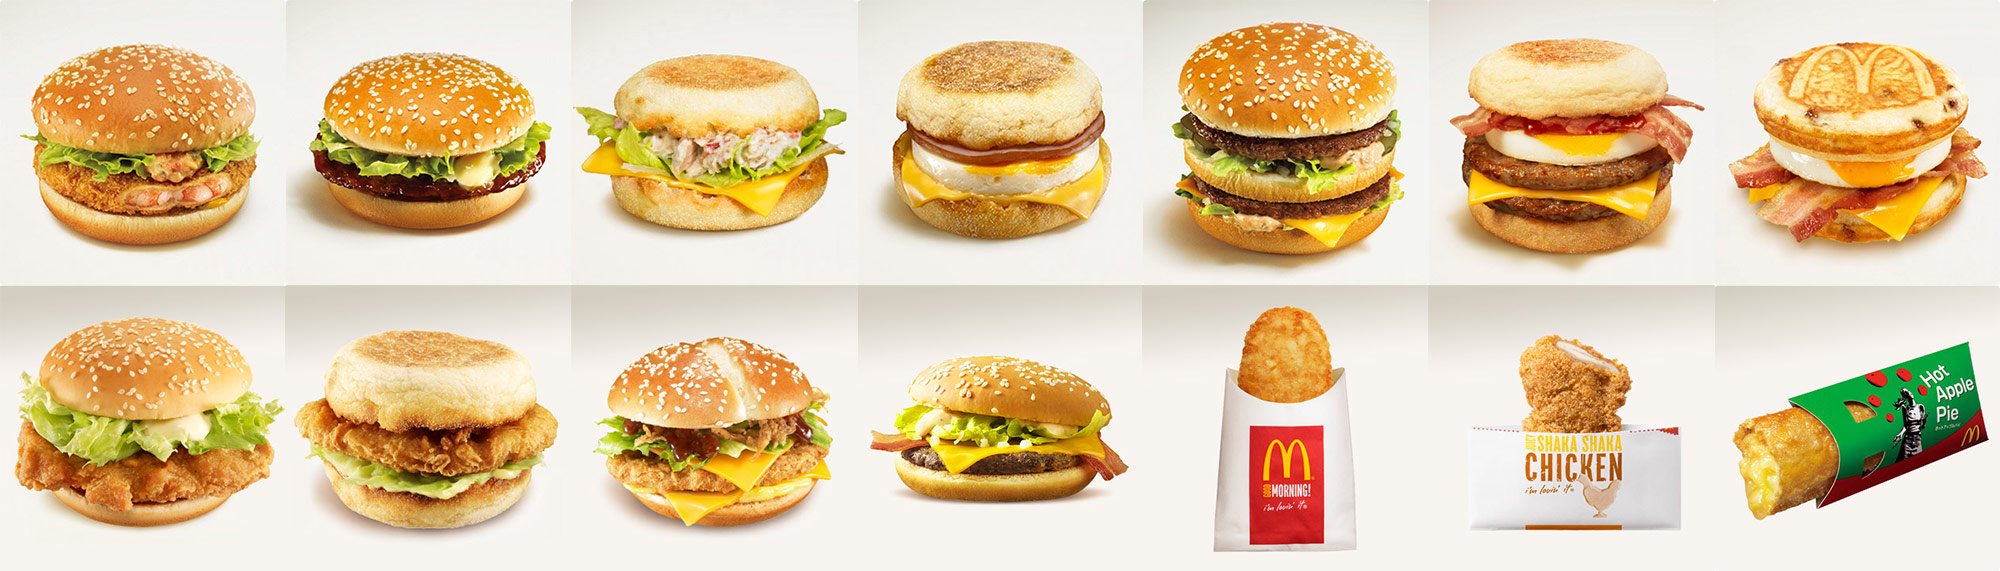 تشديد يشهد يكون راضيا  McDonald's in Japan - The American burger dilemma